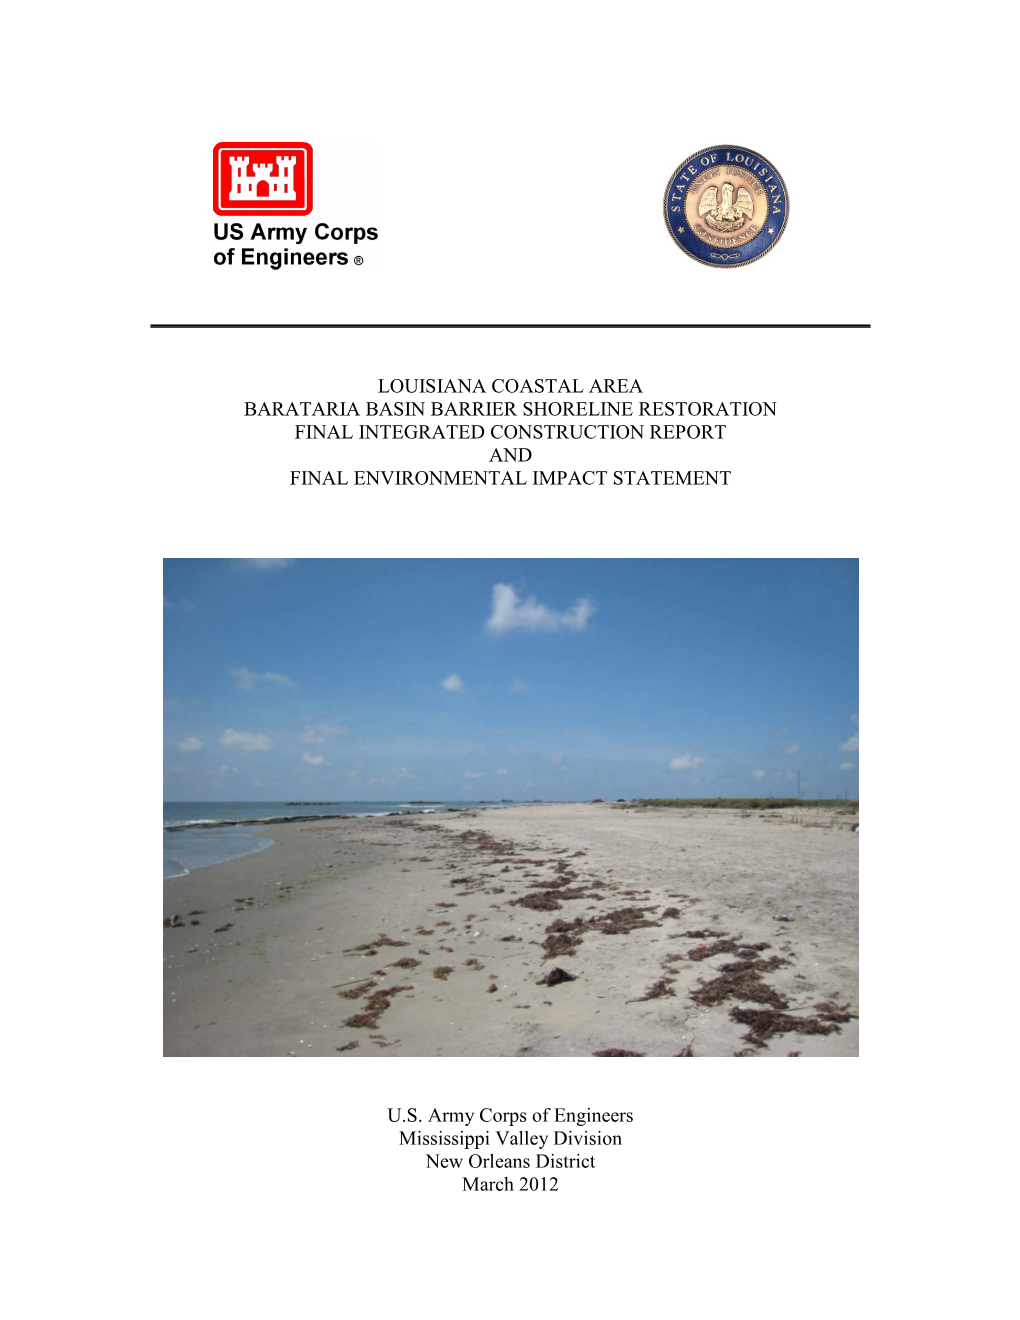 Louisiana Coastal Area Barataria Basin Barrier Shoreline Restoration Final Integrated Construction Report and Final Environmental Impact Statement